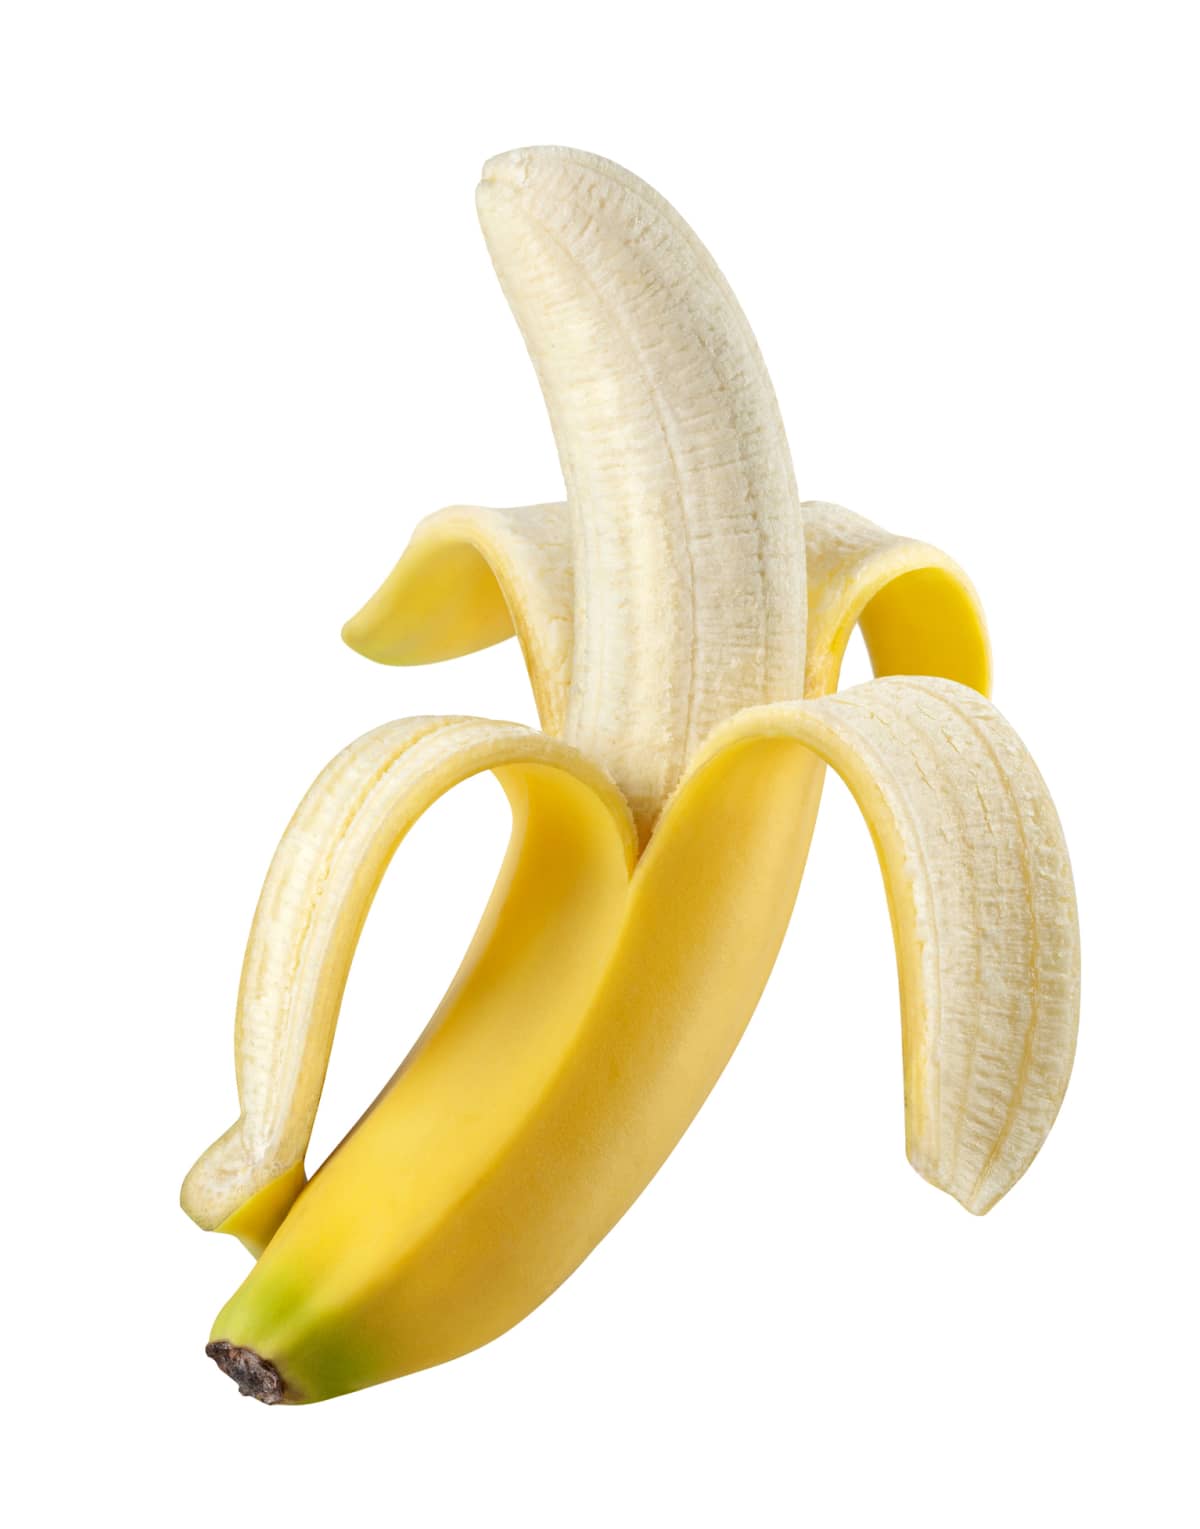 Half-peeled banana on a blank white background